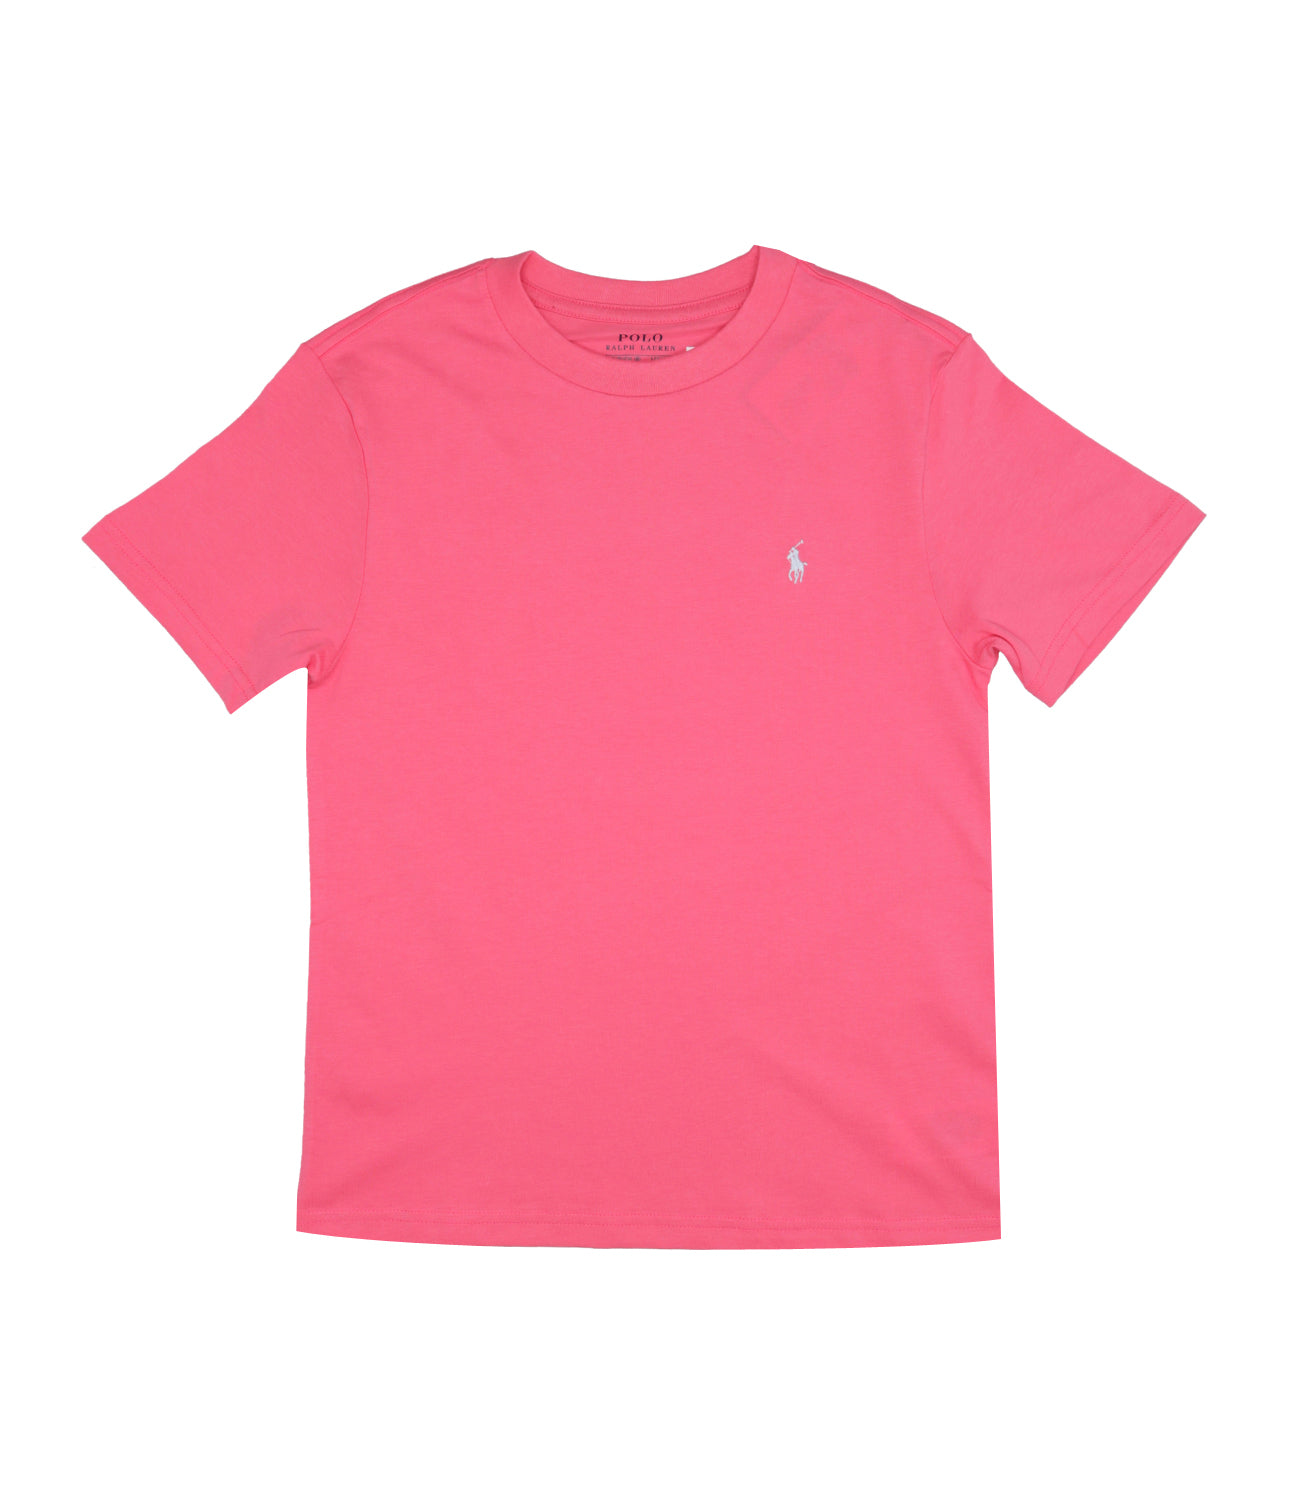 Ralph Lauren Childrenswear |T-Shirt Coral